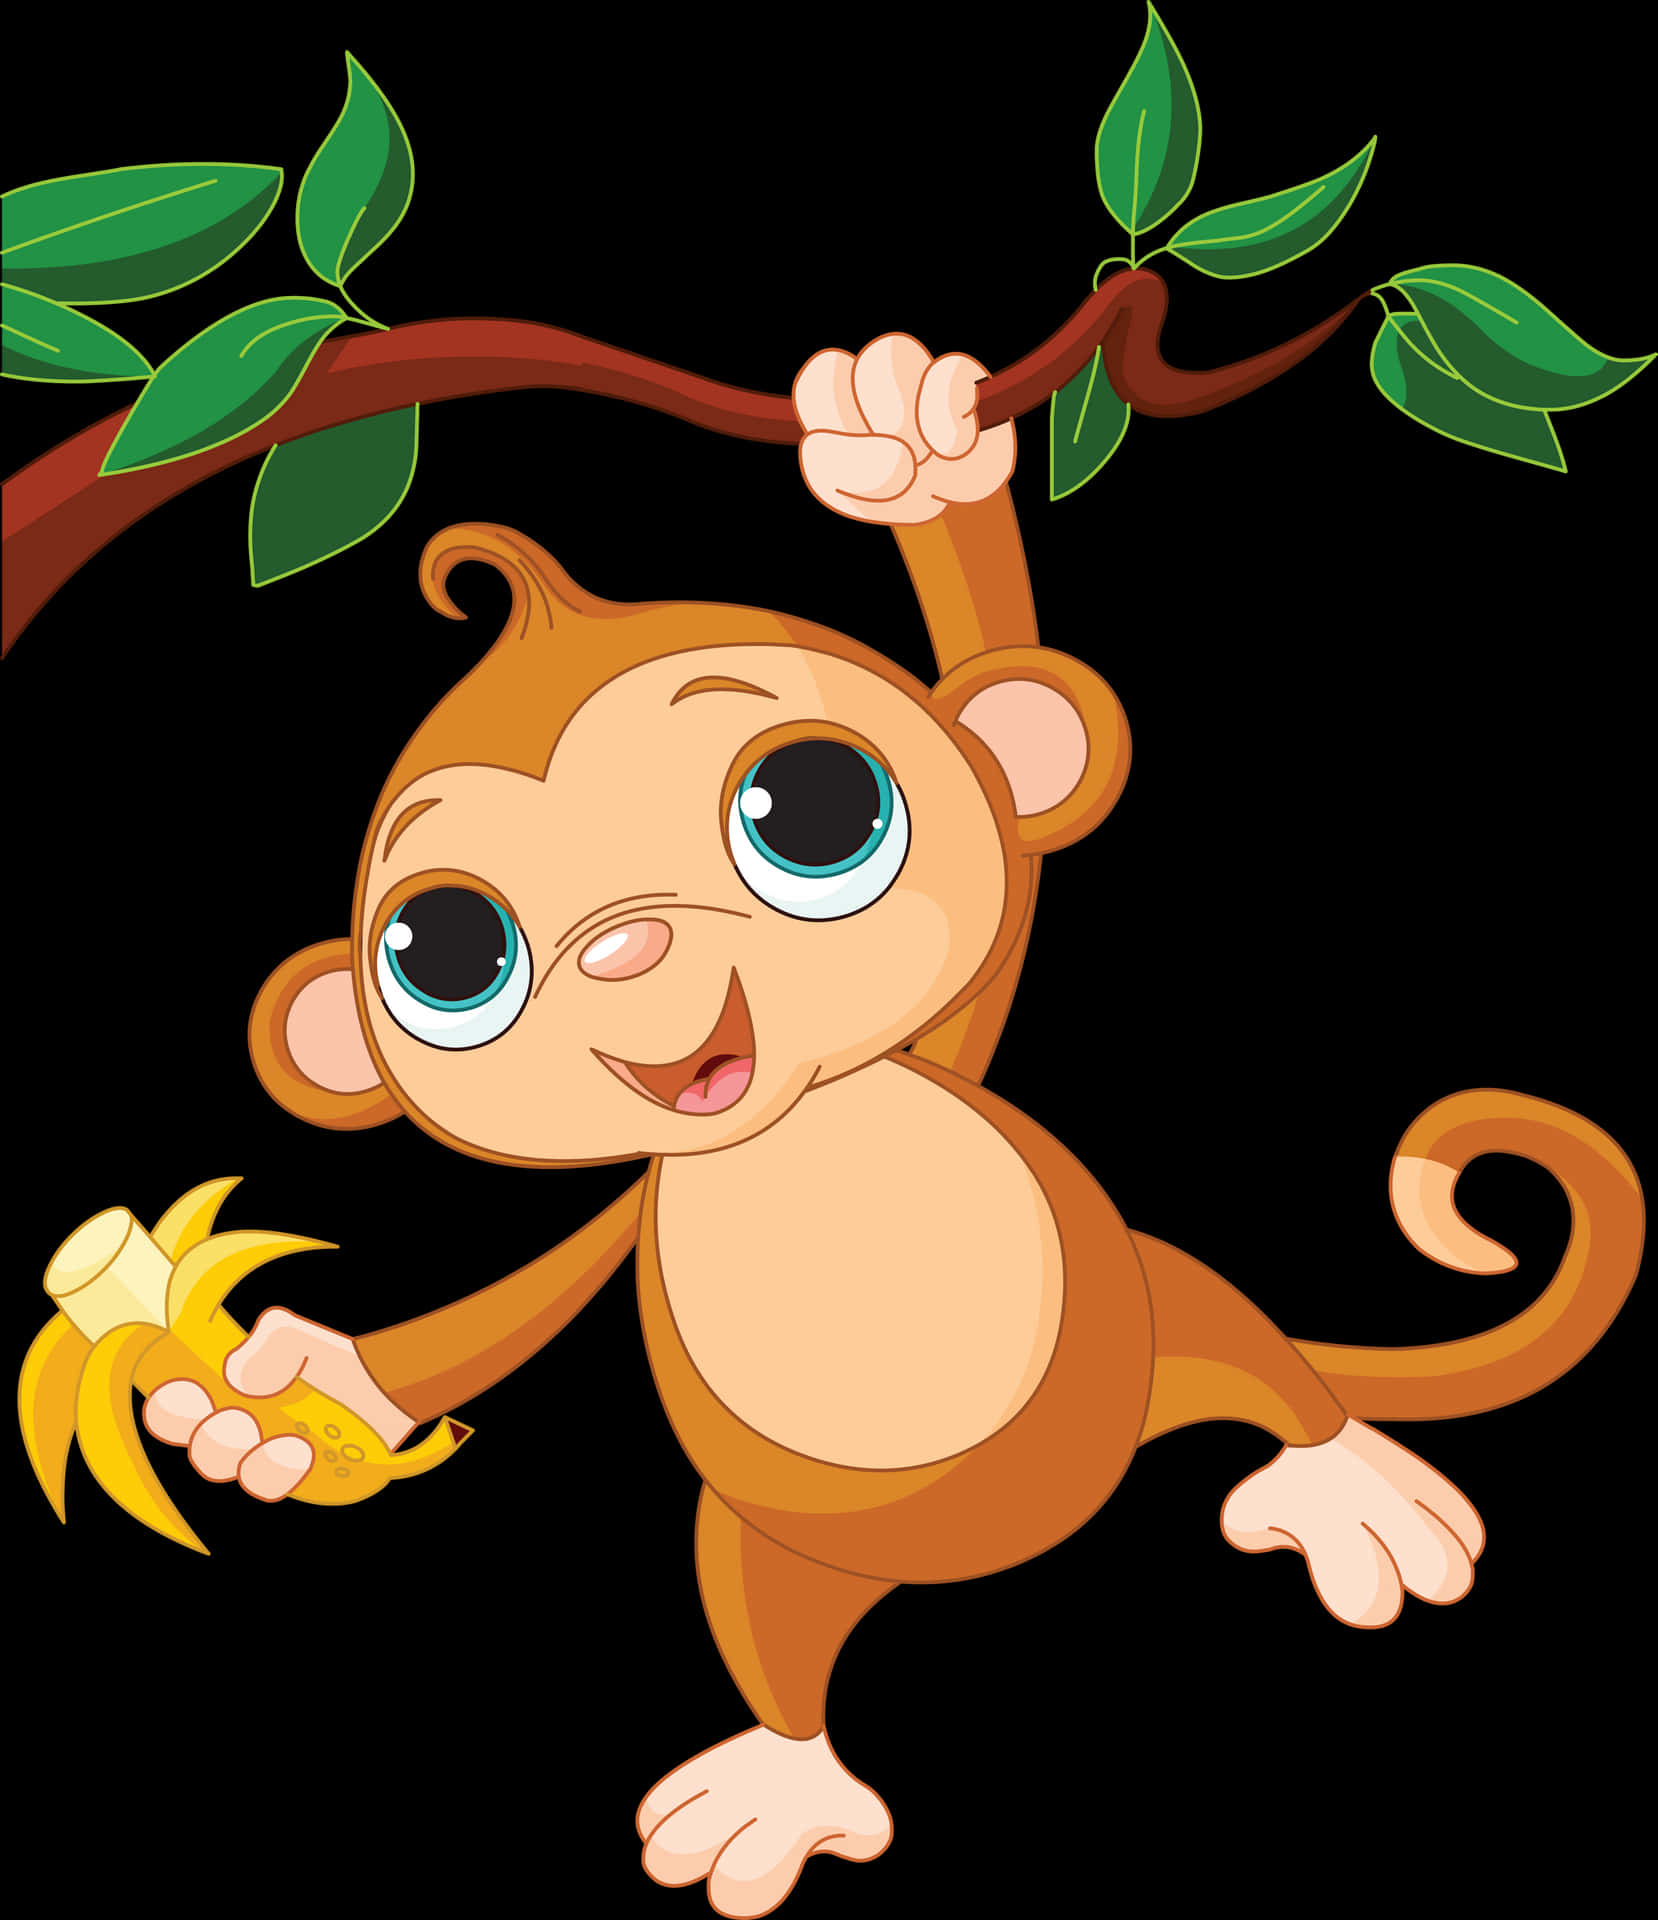 Cartoon Monkey Holding Banana PNG image